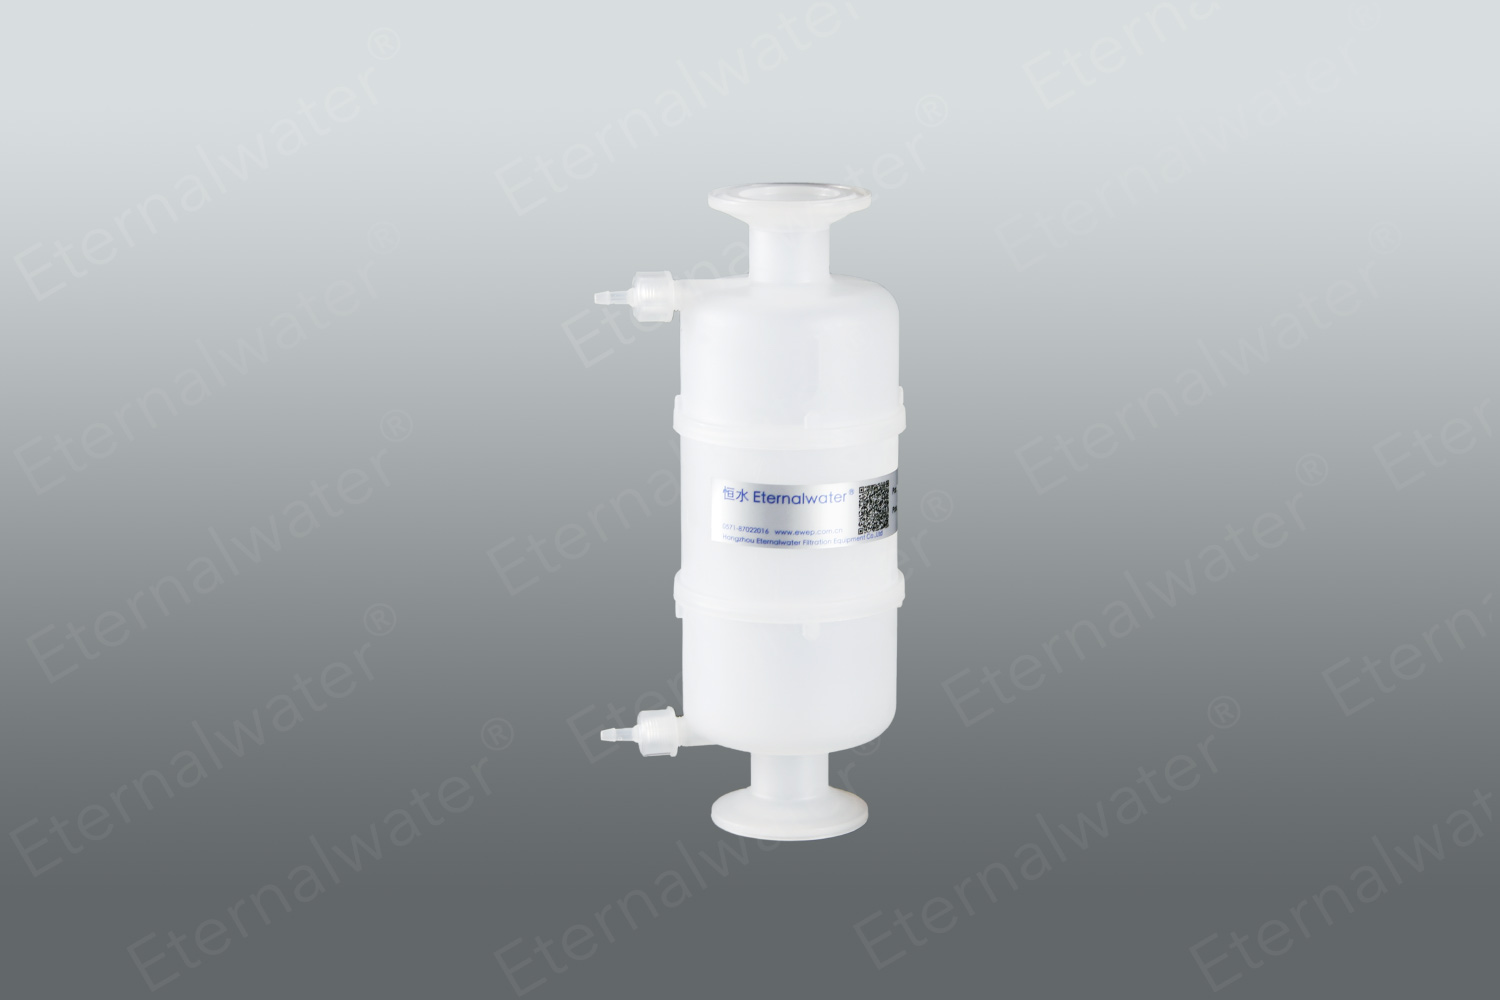 Capsule Filter Sterilization method and precautions